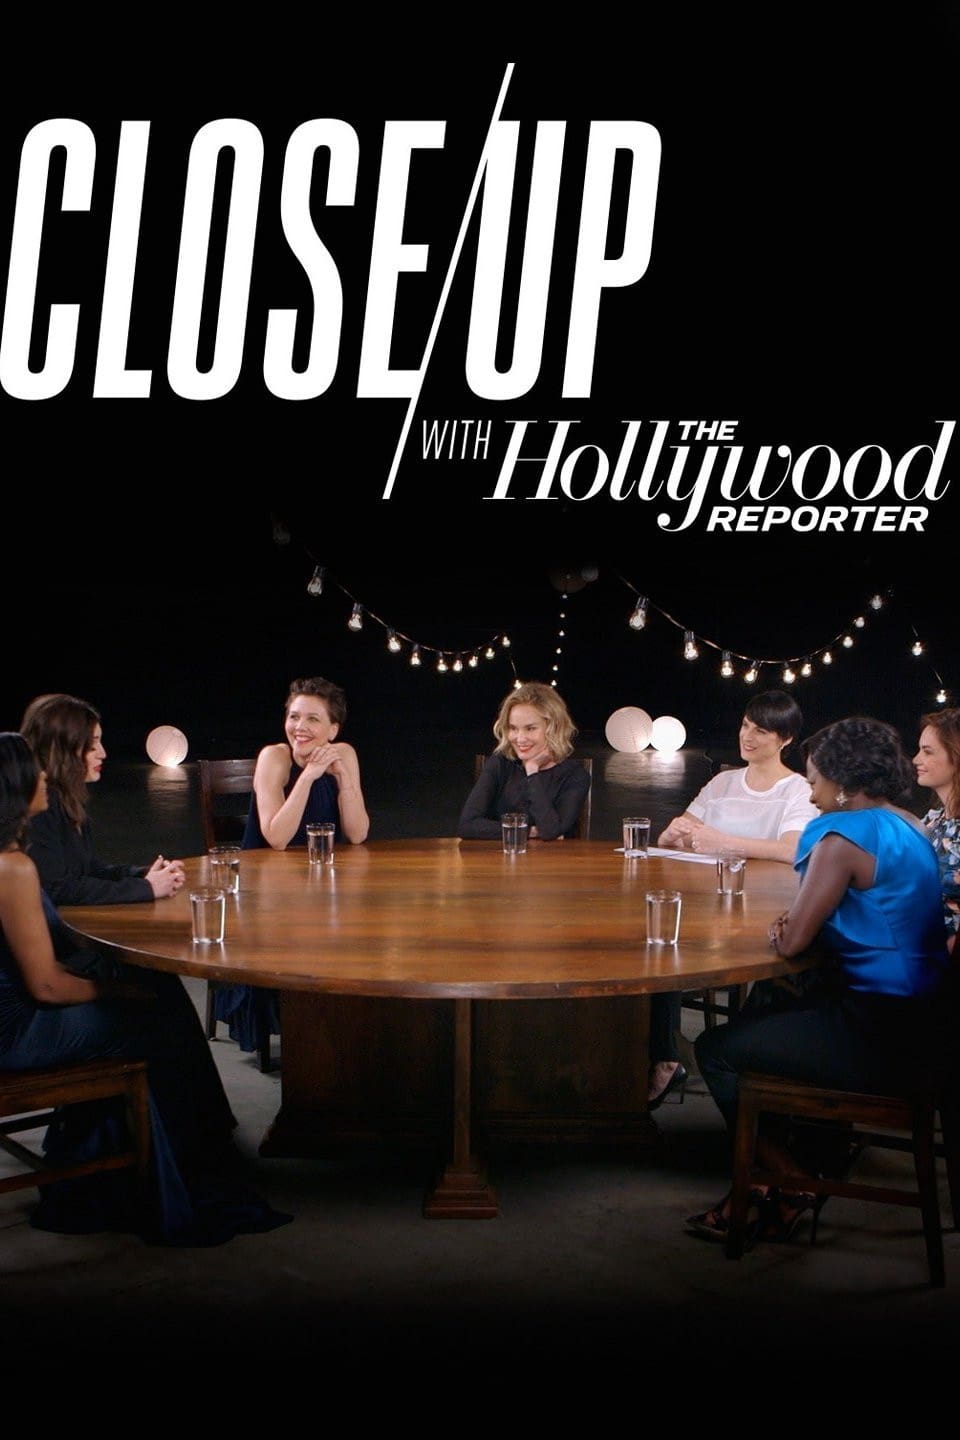 Caratula de Close Up with The Hollywood Reporter (Hollywood en primer plano) 